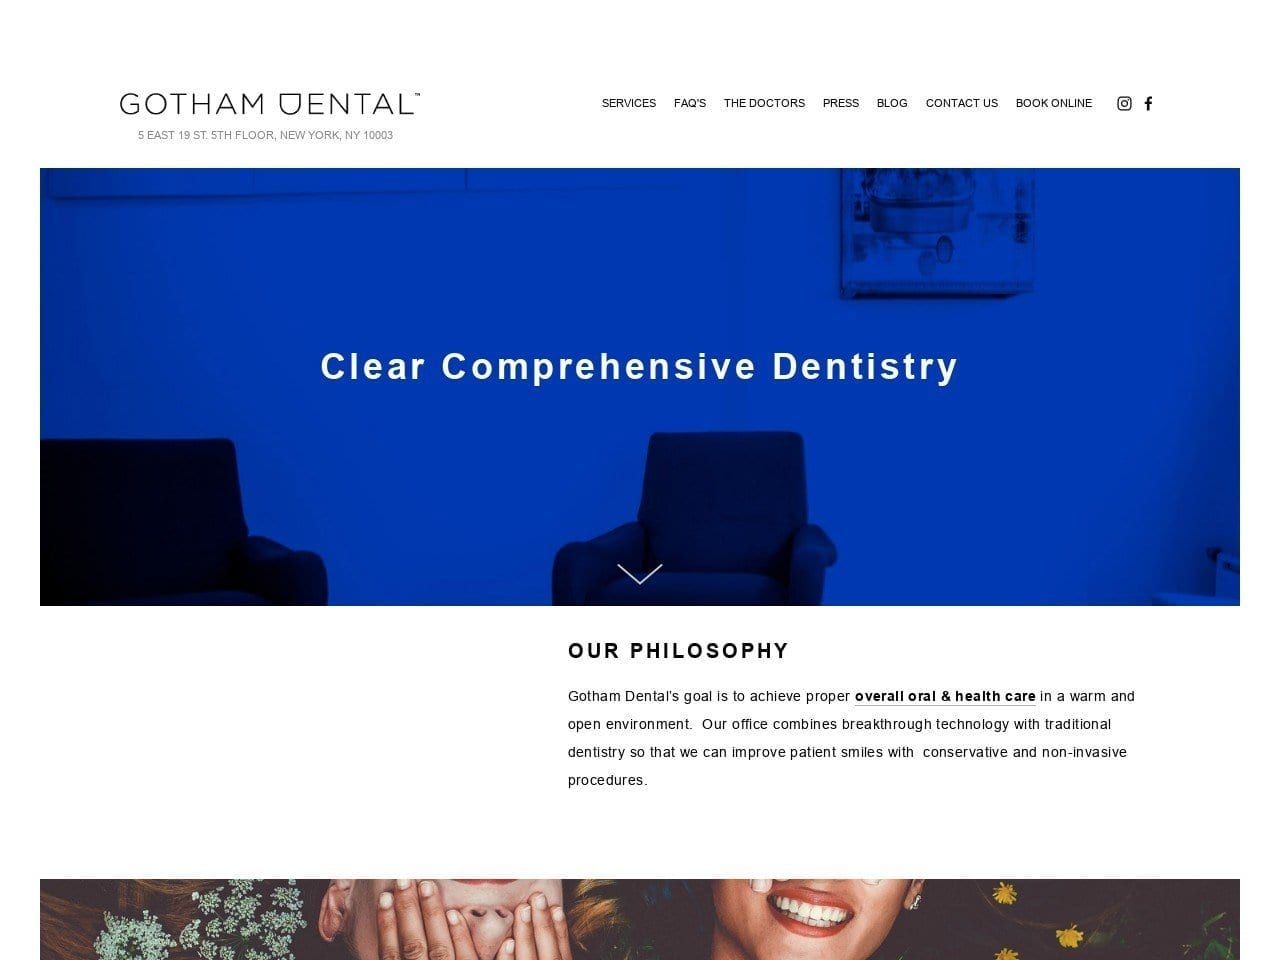 Gotham Dental Website Screenshot from gothamdental.com